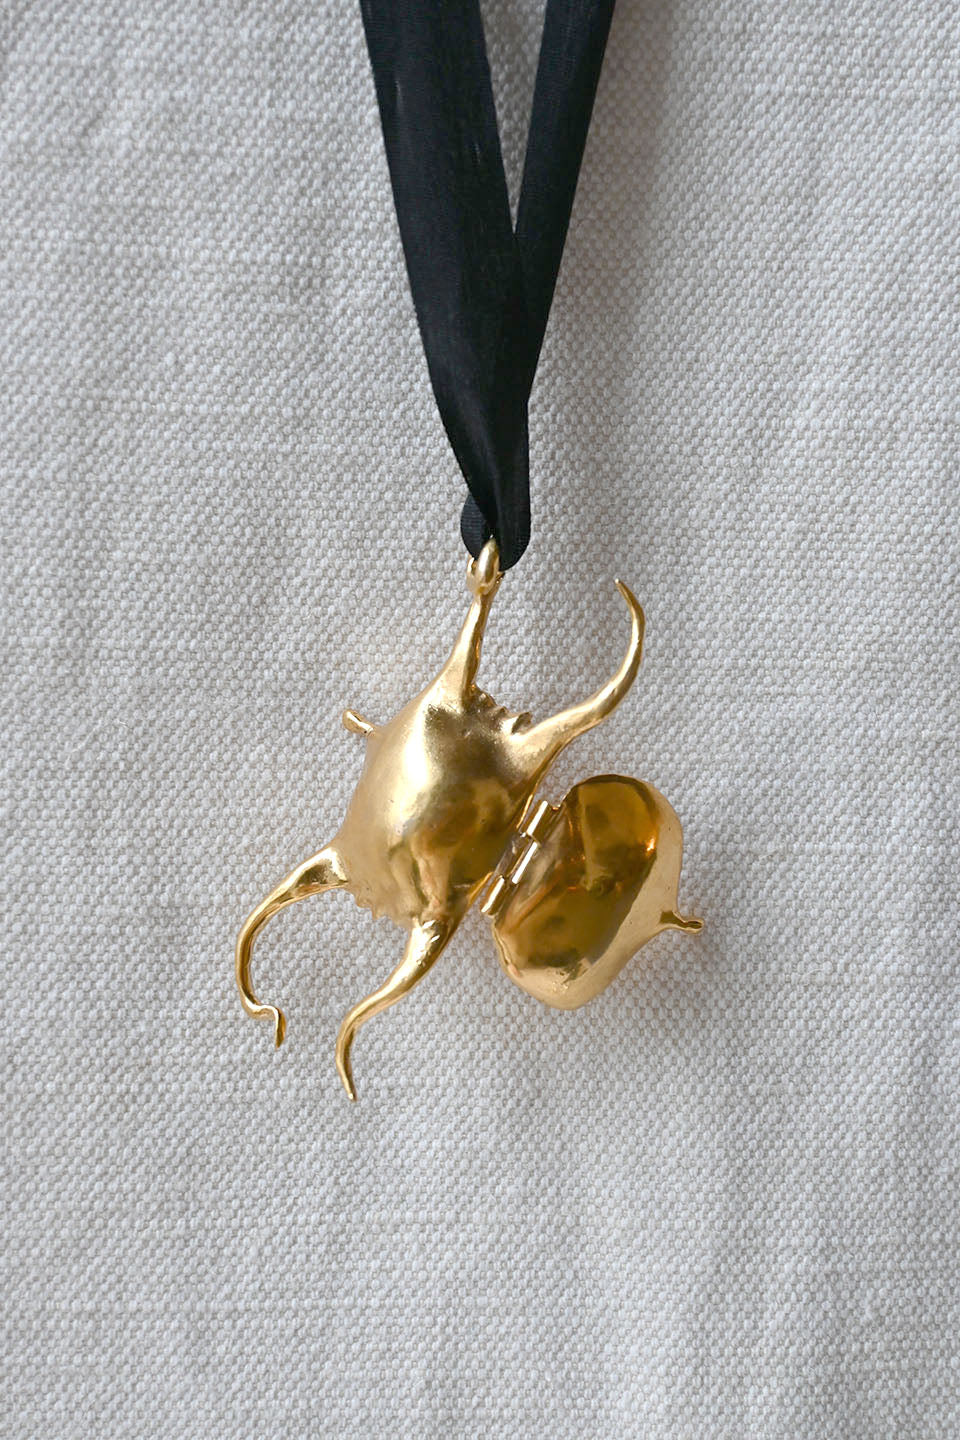 Mermaid Purse Locket (Gold + Silver)